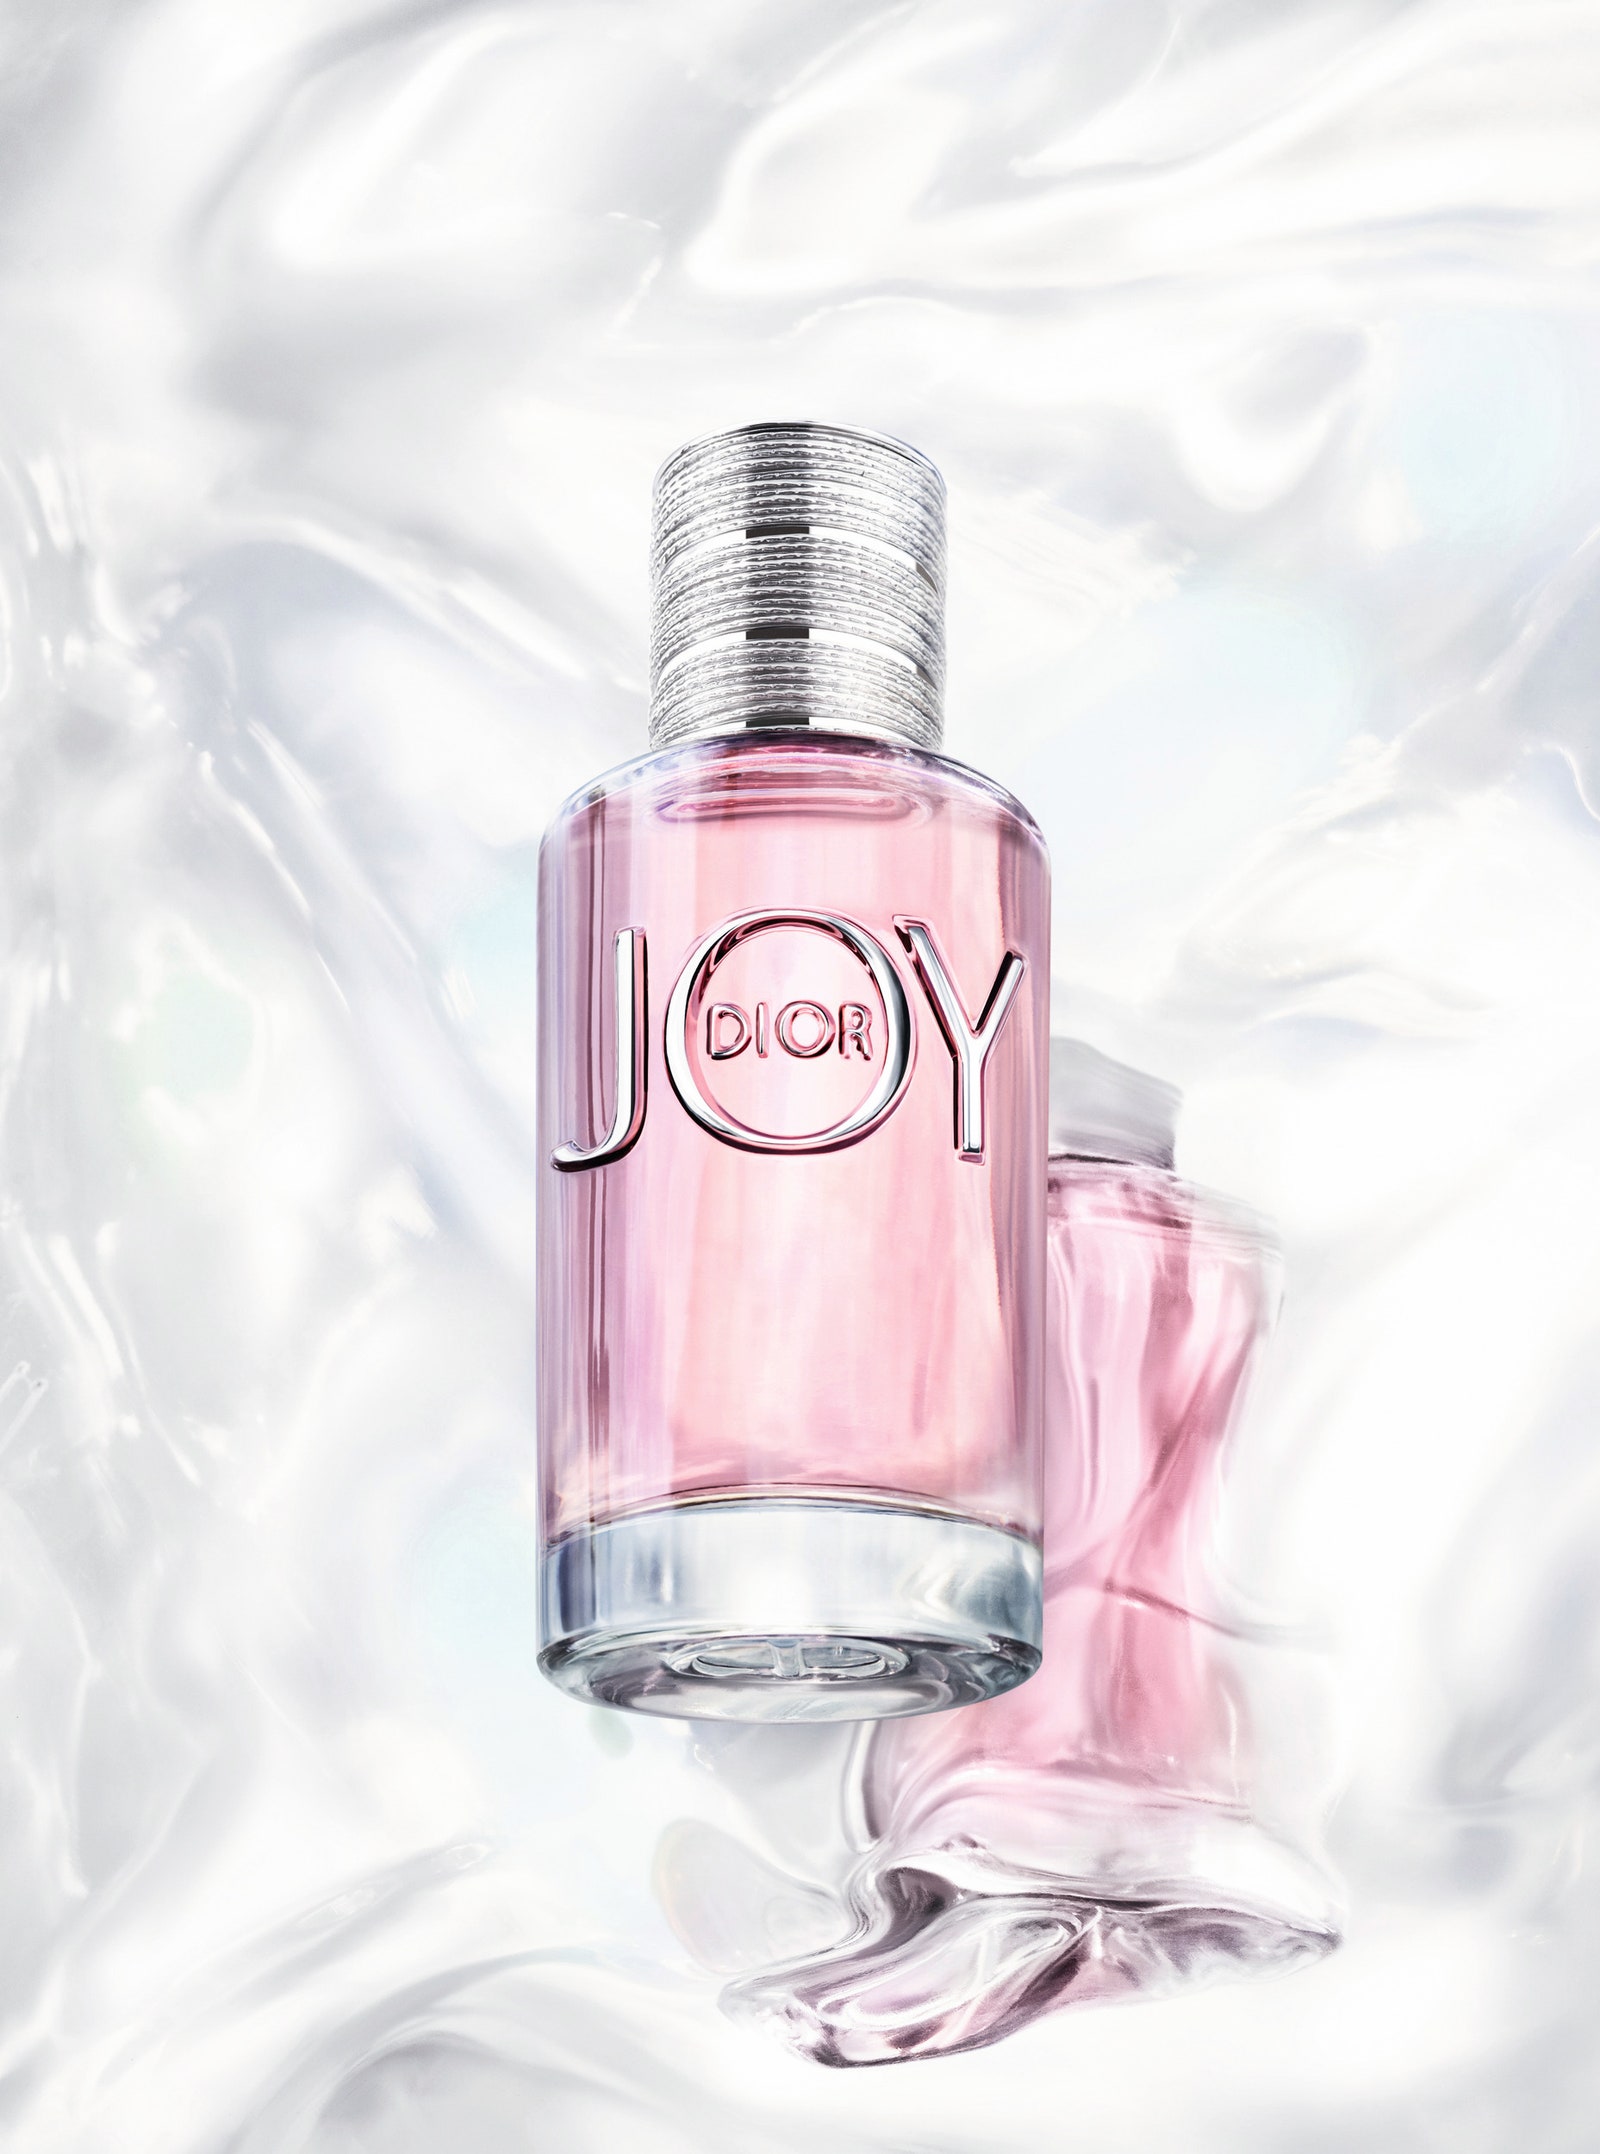 Dior Joy фото и видео с Дженнифер Лоуренс из рекламной кампании аромата